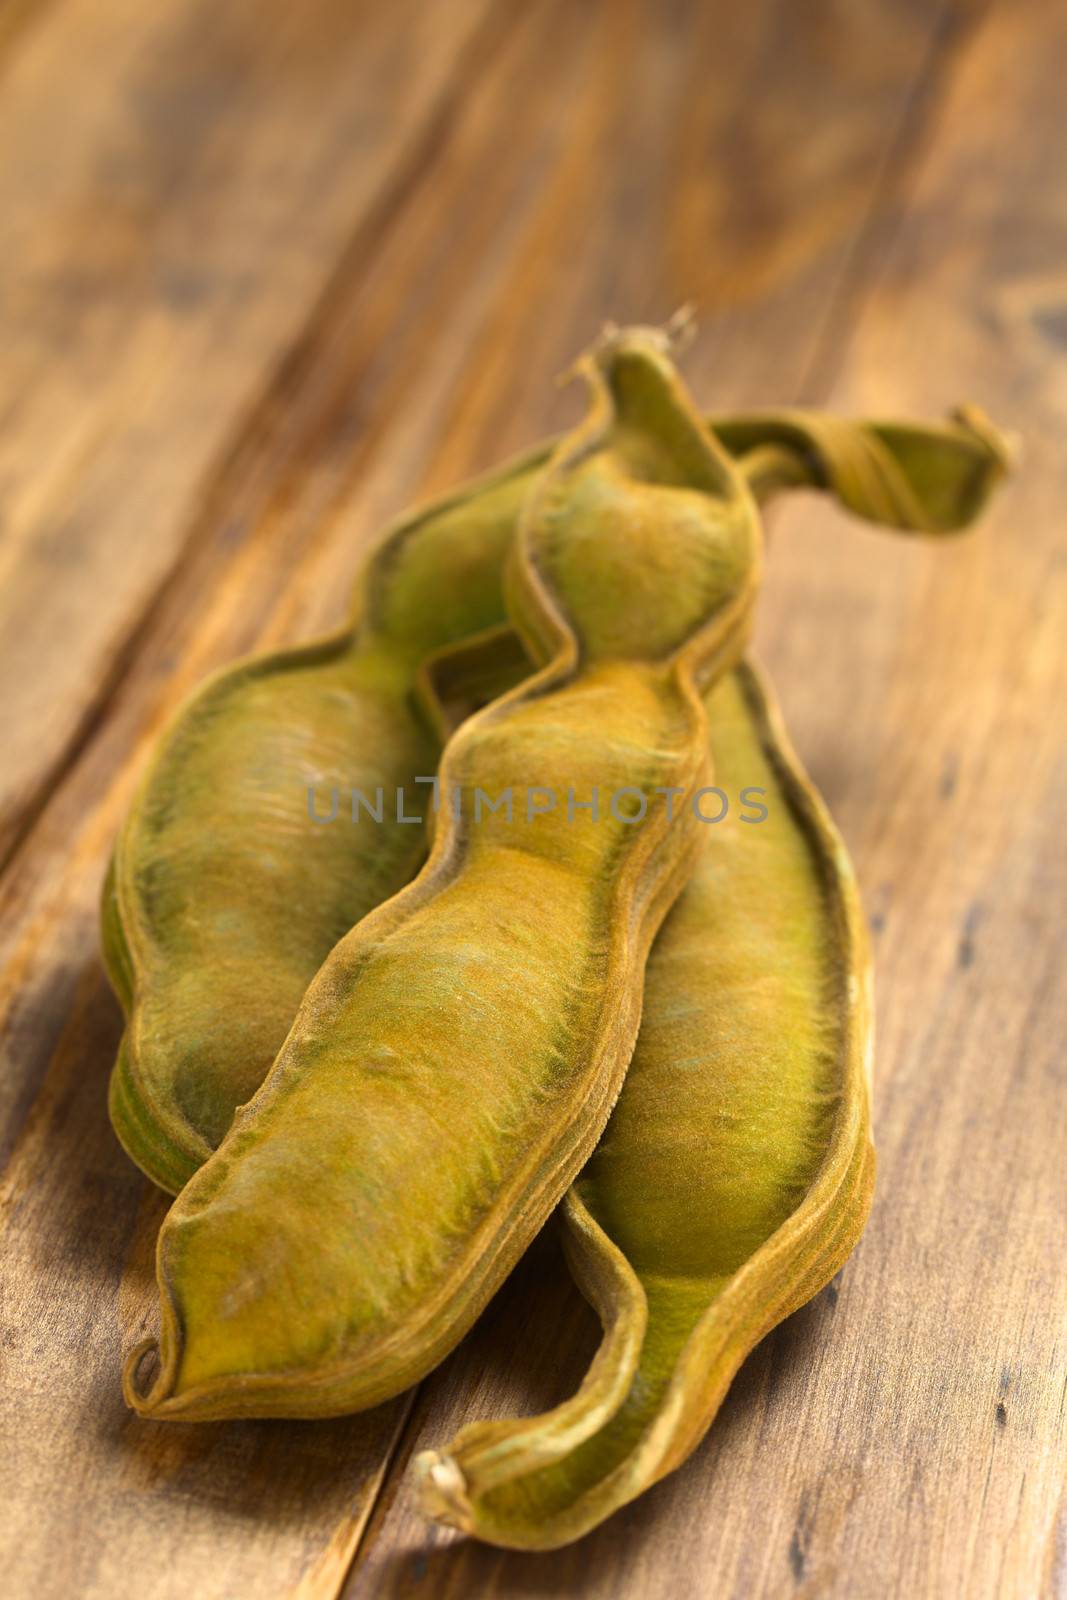 Peruvian Fruit Called Pacay by ildi